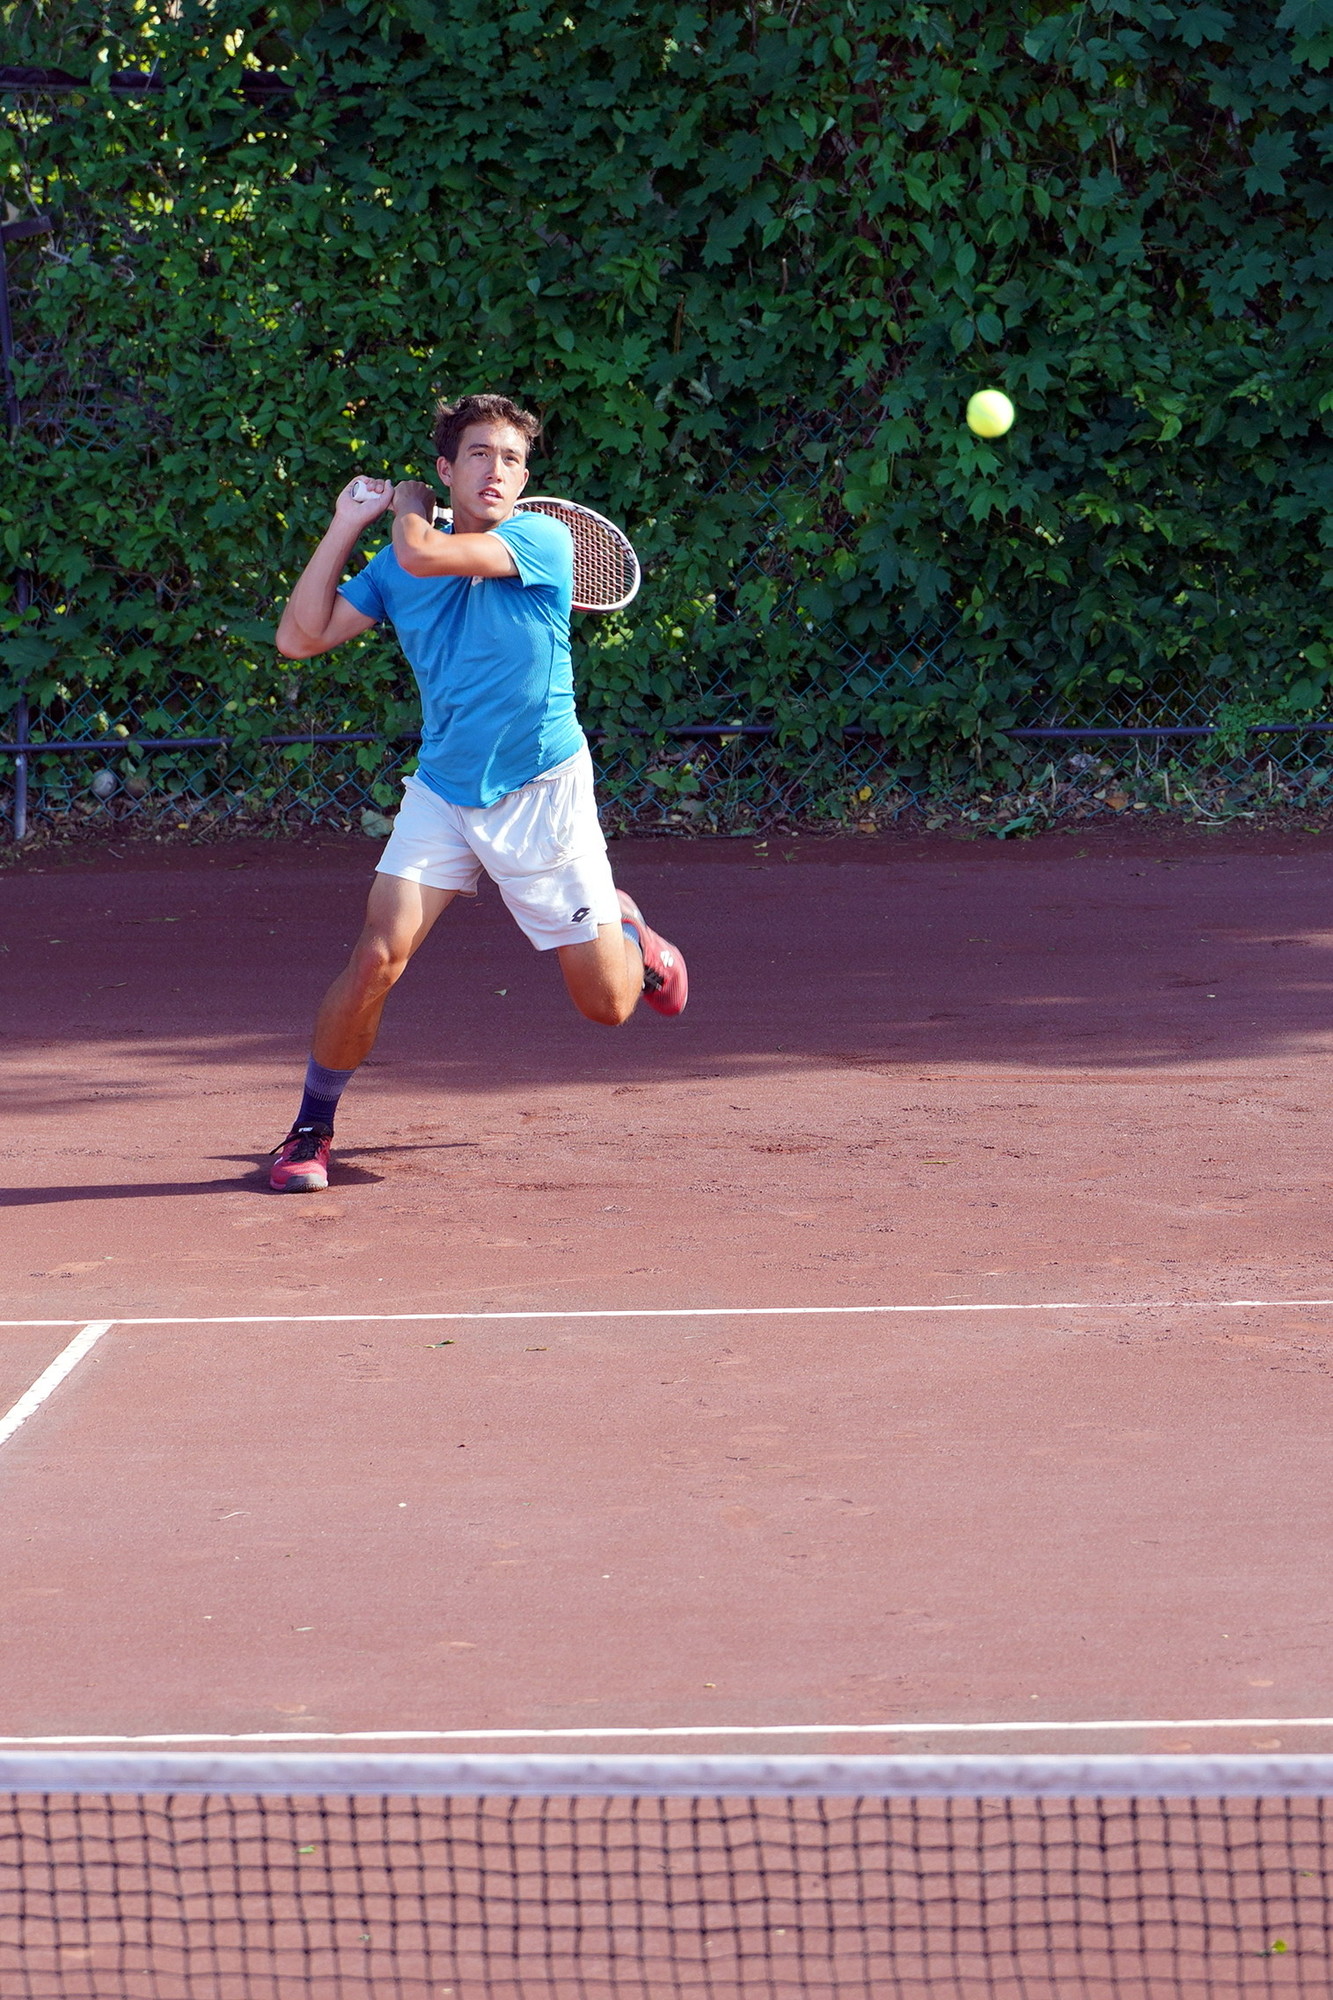 Leon L. teaches tennis lessons in Grafton, MA